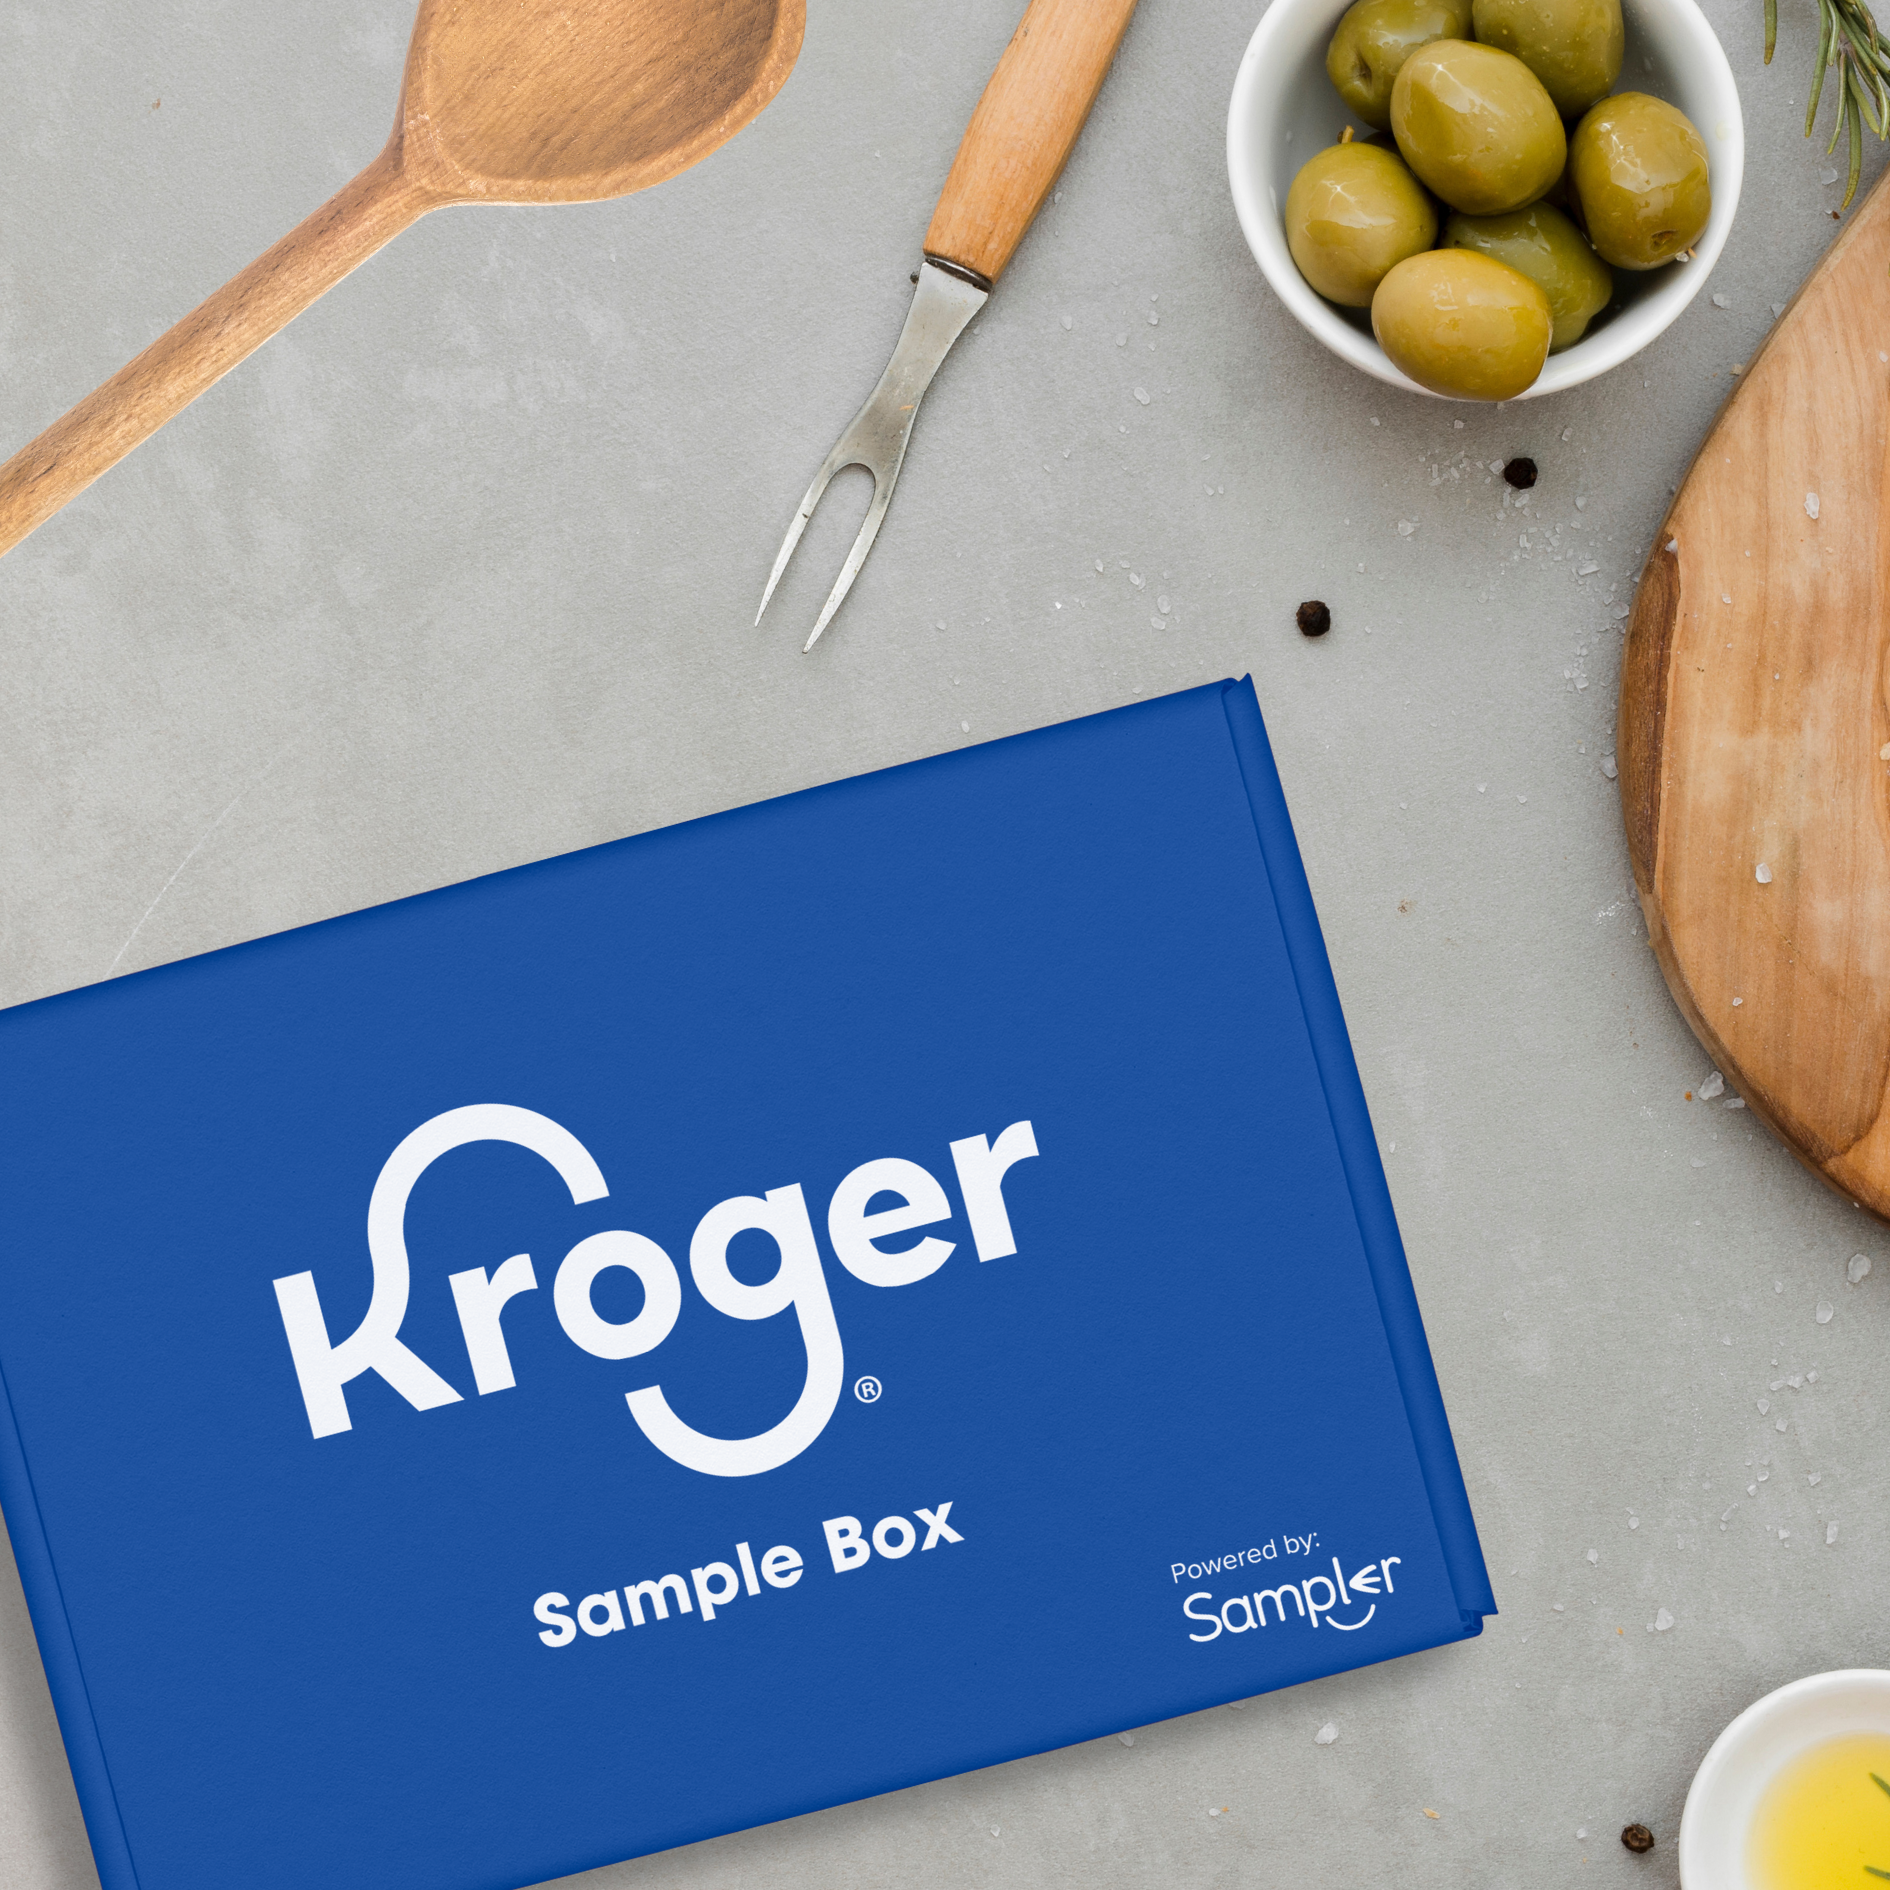 New Free Kroger Sampler Boxes